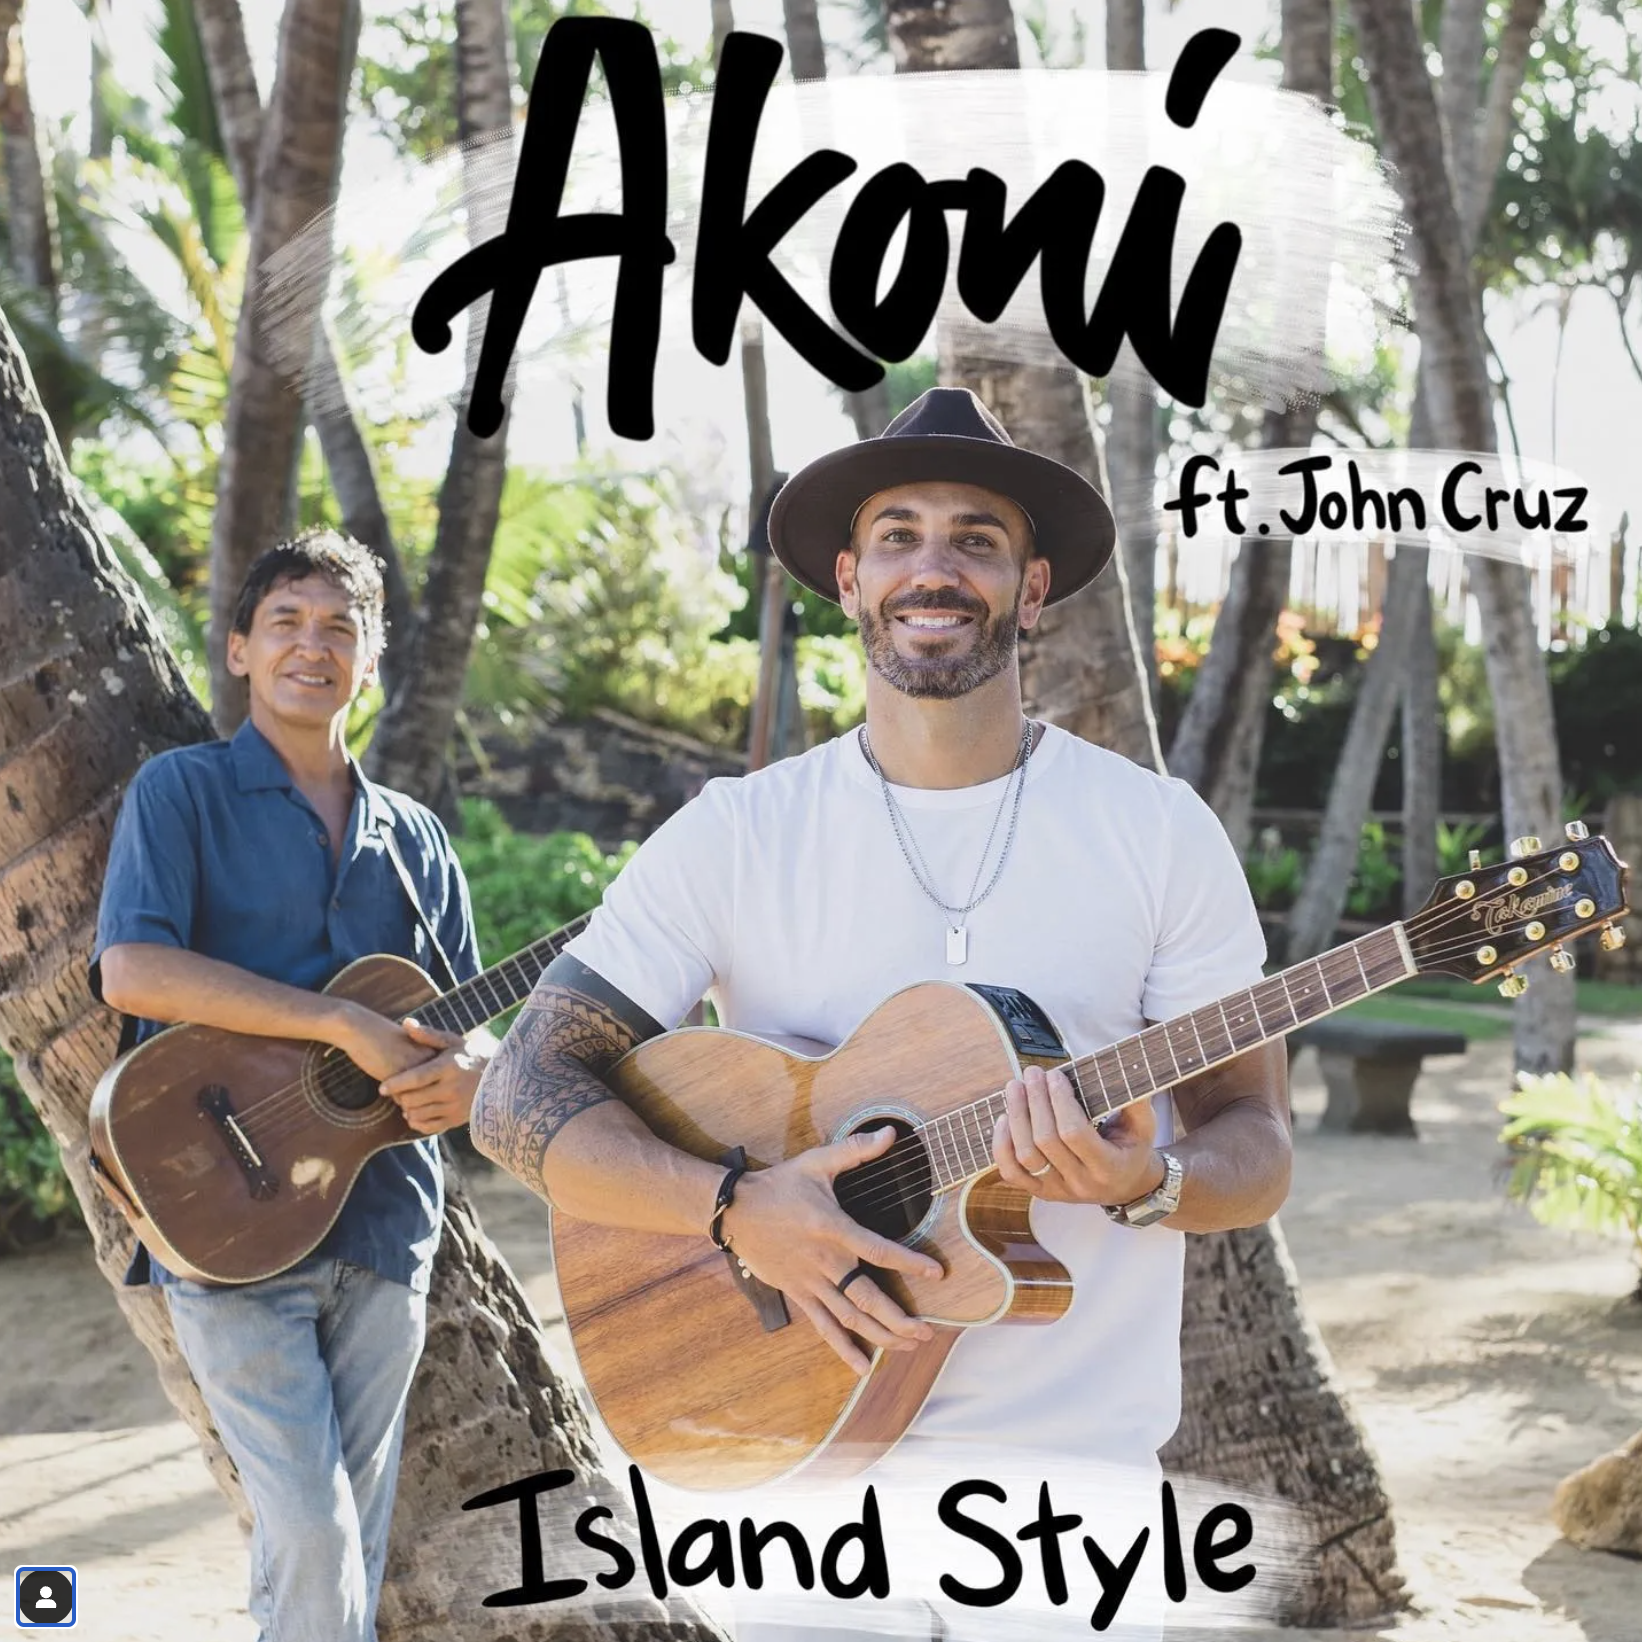 Art for Island Style by Akoni ft. John Cruz